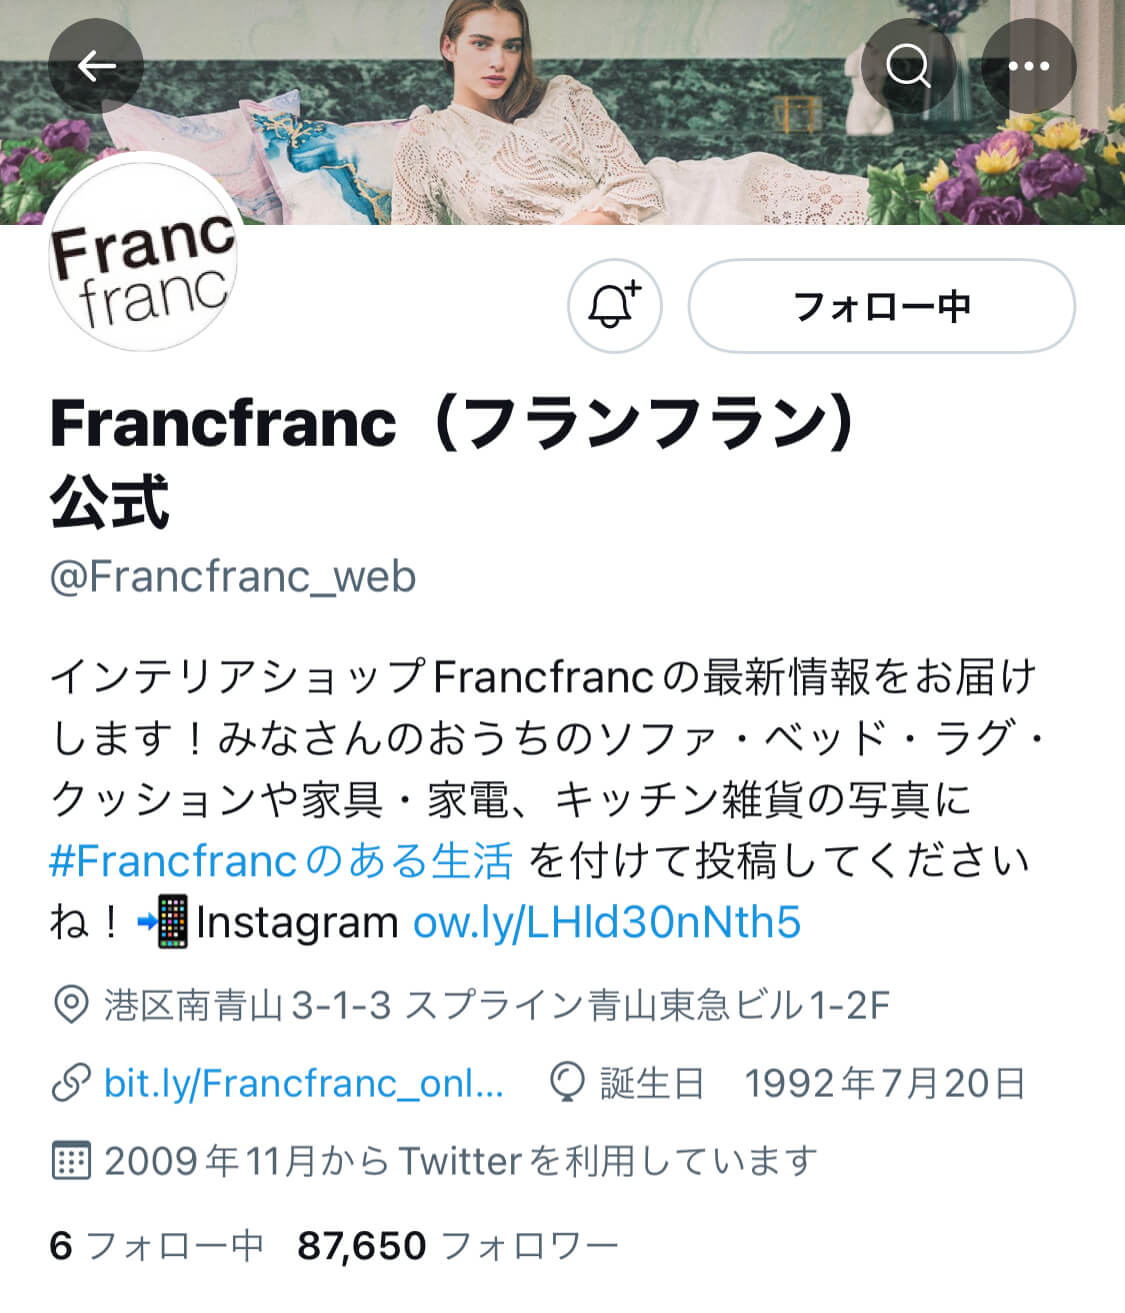 francfran-twitter-top